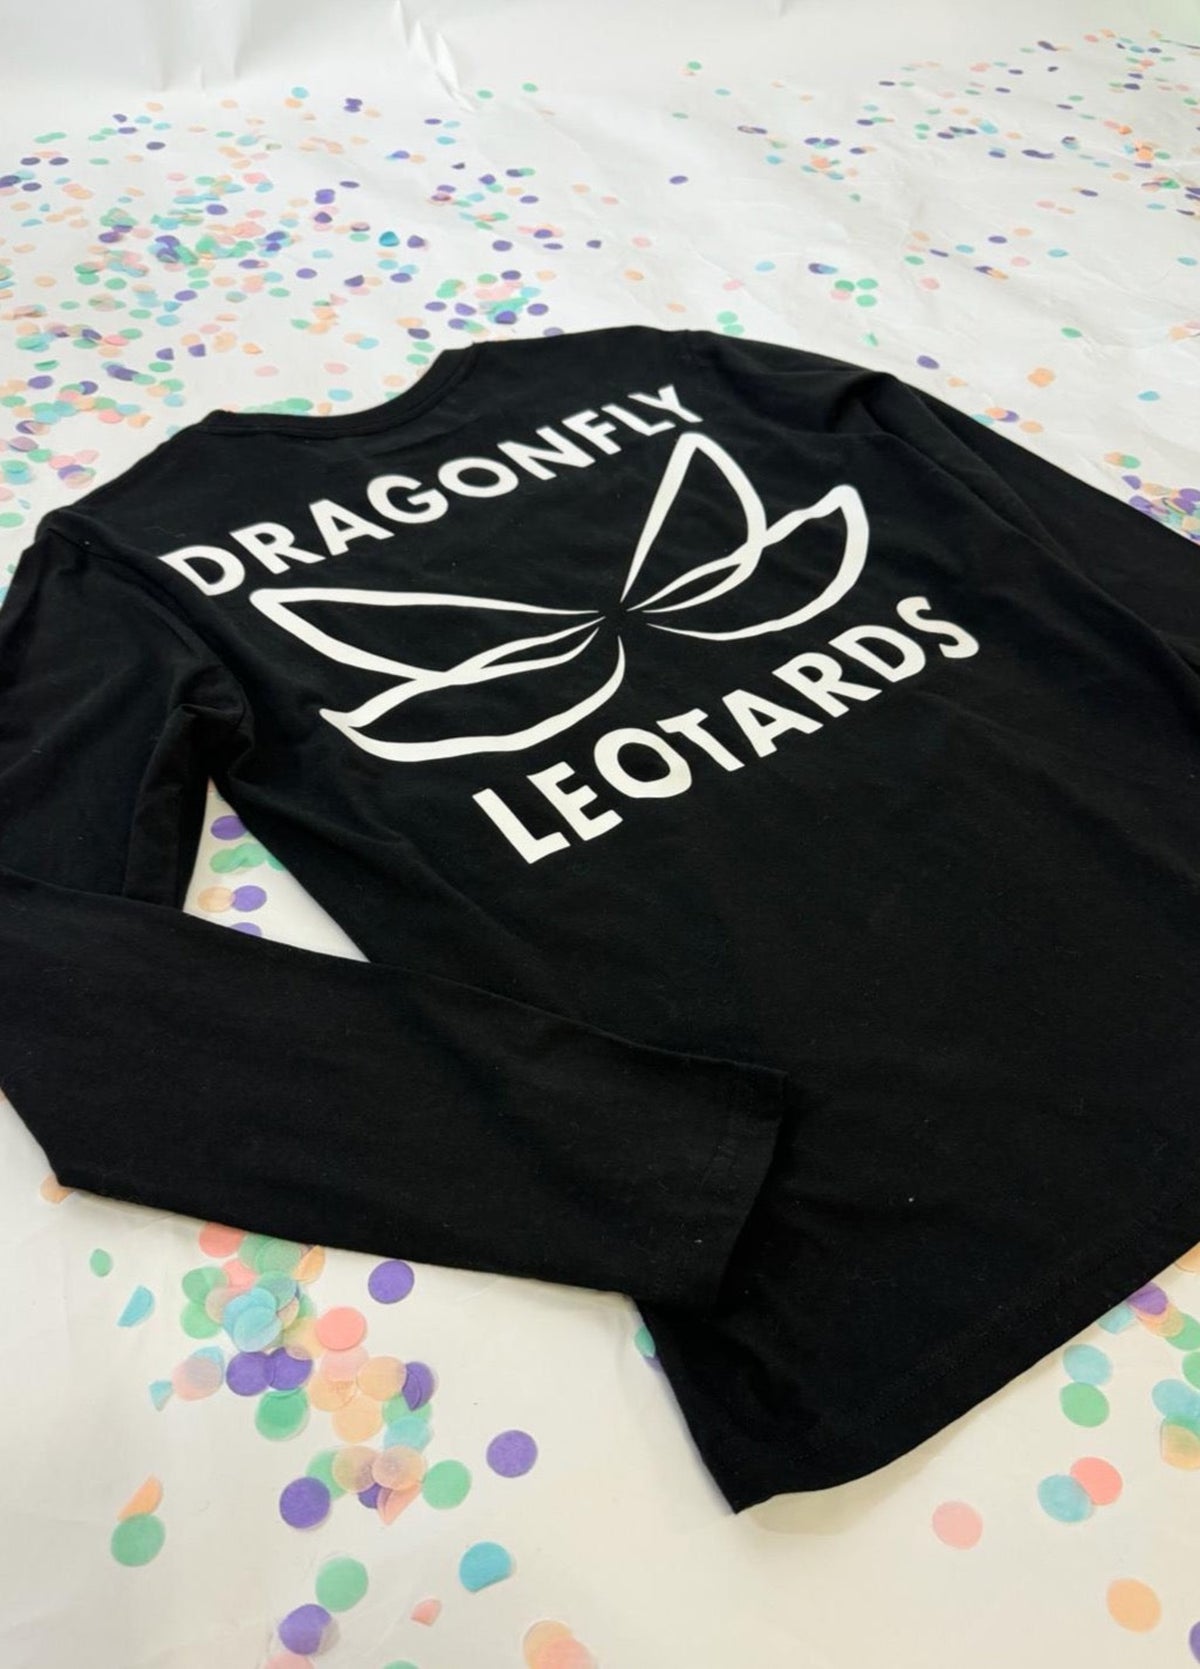 Dragonfly Unisex Long Sleeve T-shirt Black or White - Dragonfly Leotards - Children's Sportswear